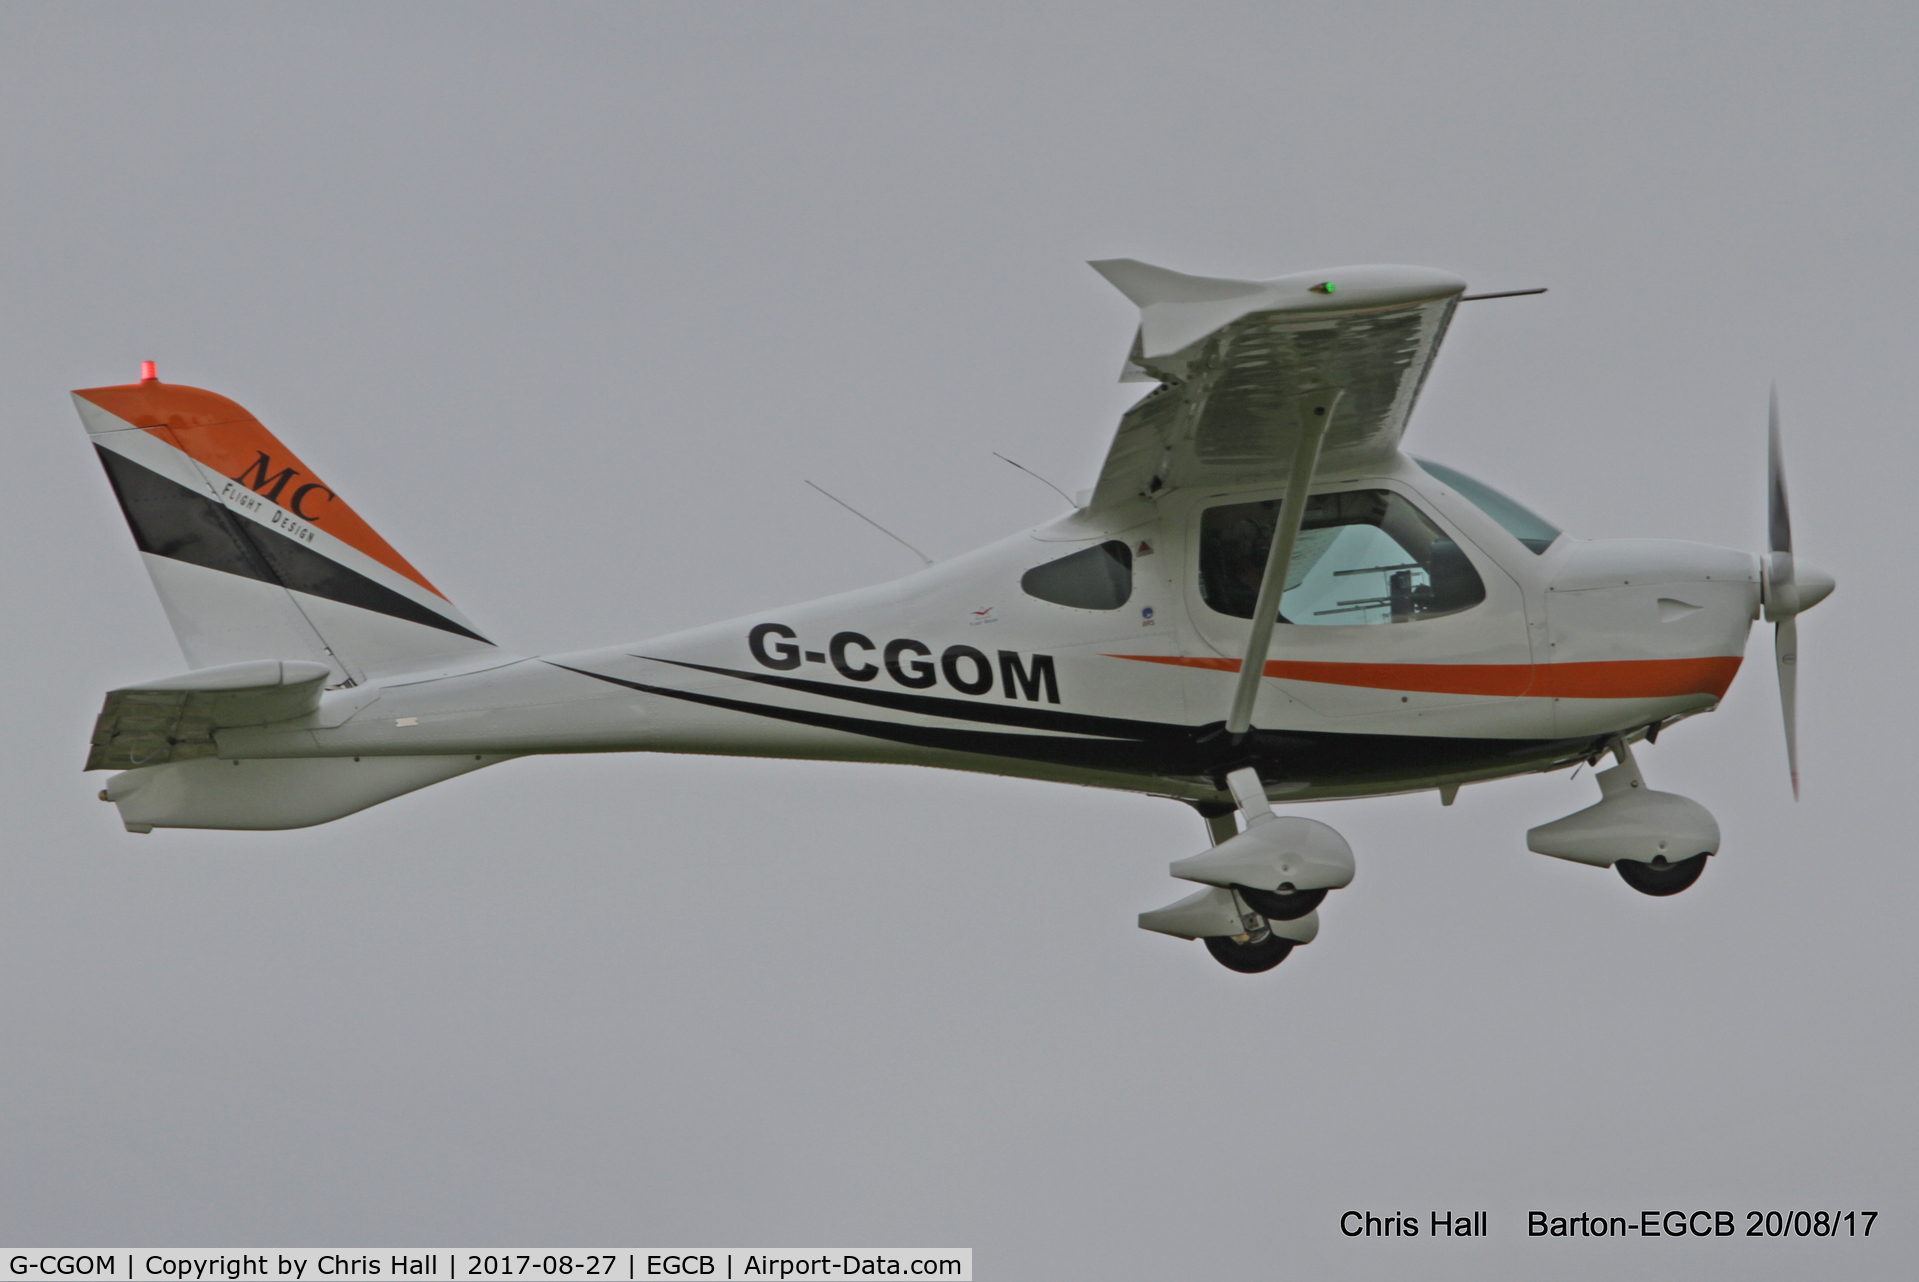 G-CGOM, 2010 Flight Design MC C/N A-10-04-31, at Barton